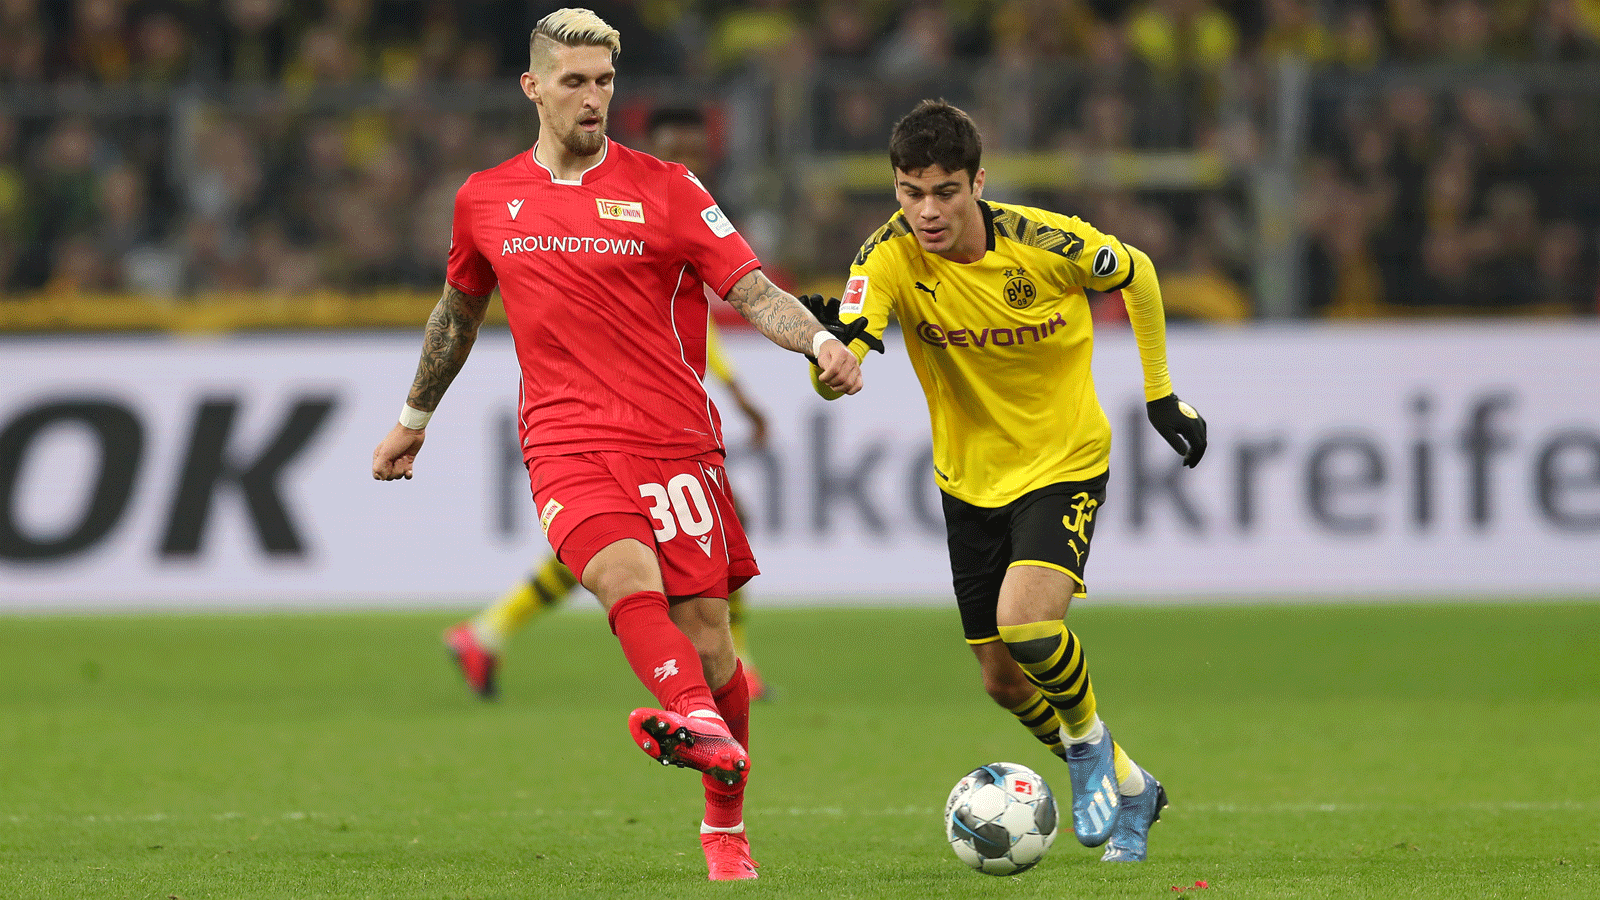 
                <strong>Platz 6: Giovanni Reyna (17)</strong><br>
                 - Verein: Borussia Dortmund - Position: Offensives Mittelfeld - Marktwert: 15 Millionen Euro
              